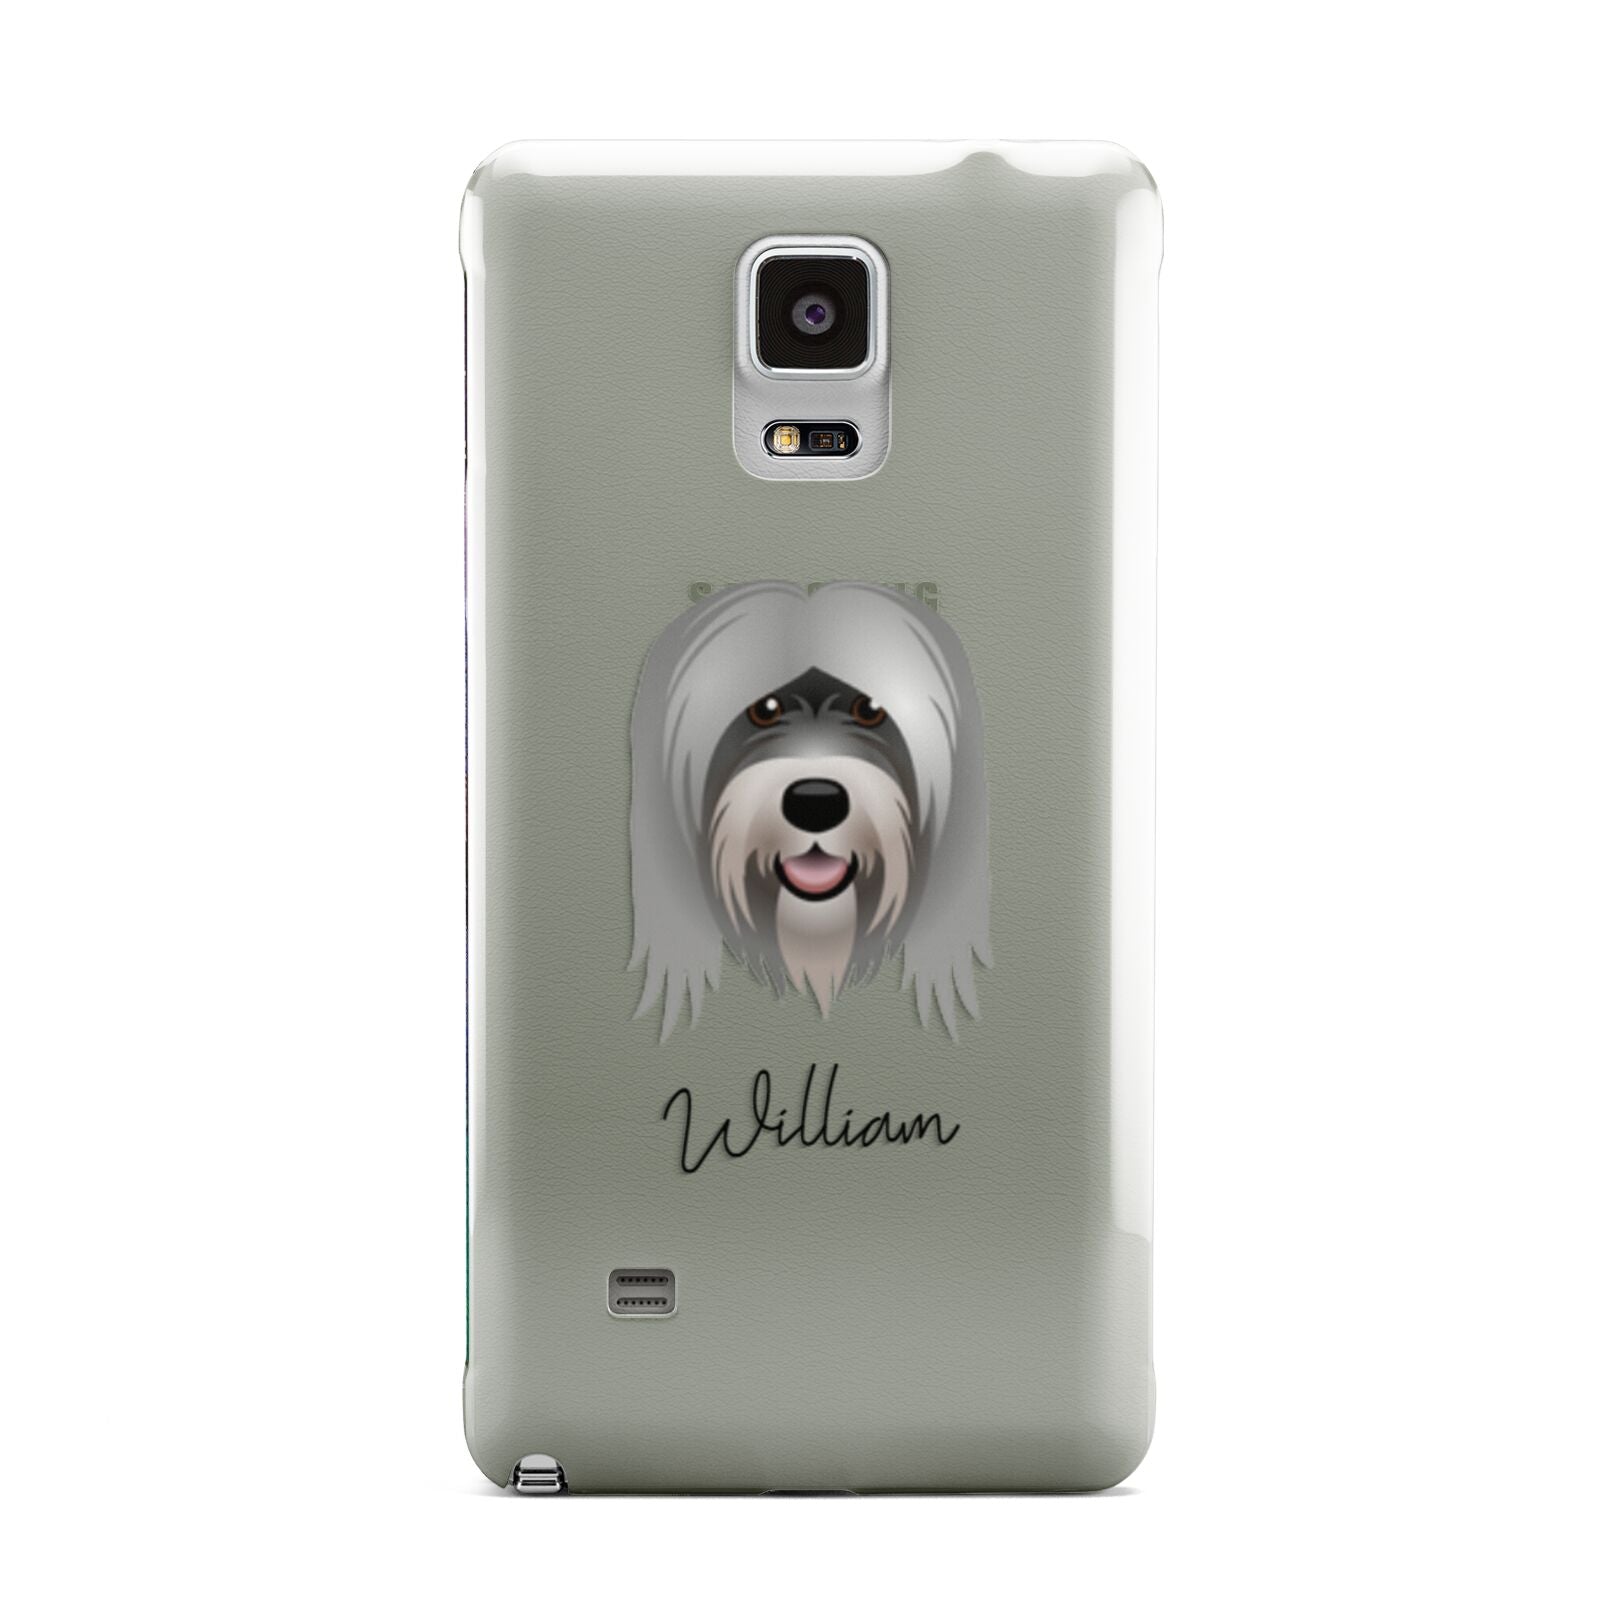 Tibetan Terrier Personalised Samsung Galaxy Note 4 Case